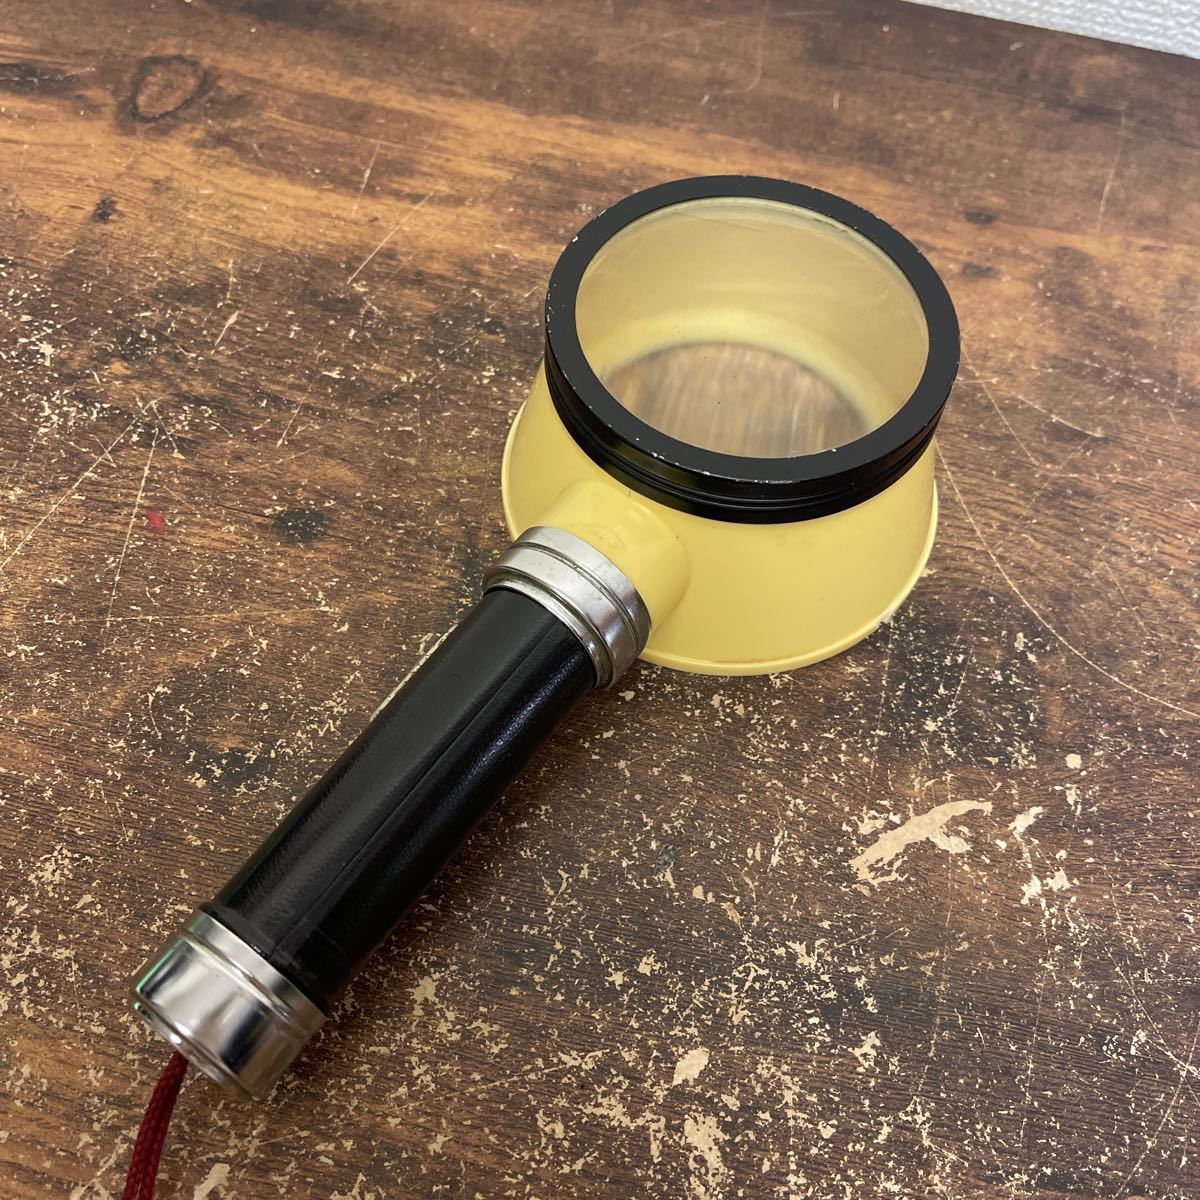 ^ retro light attaching magnifier length 23cm width 11cm used junk 